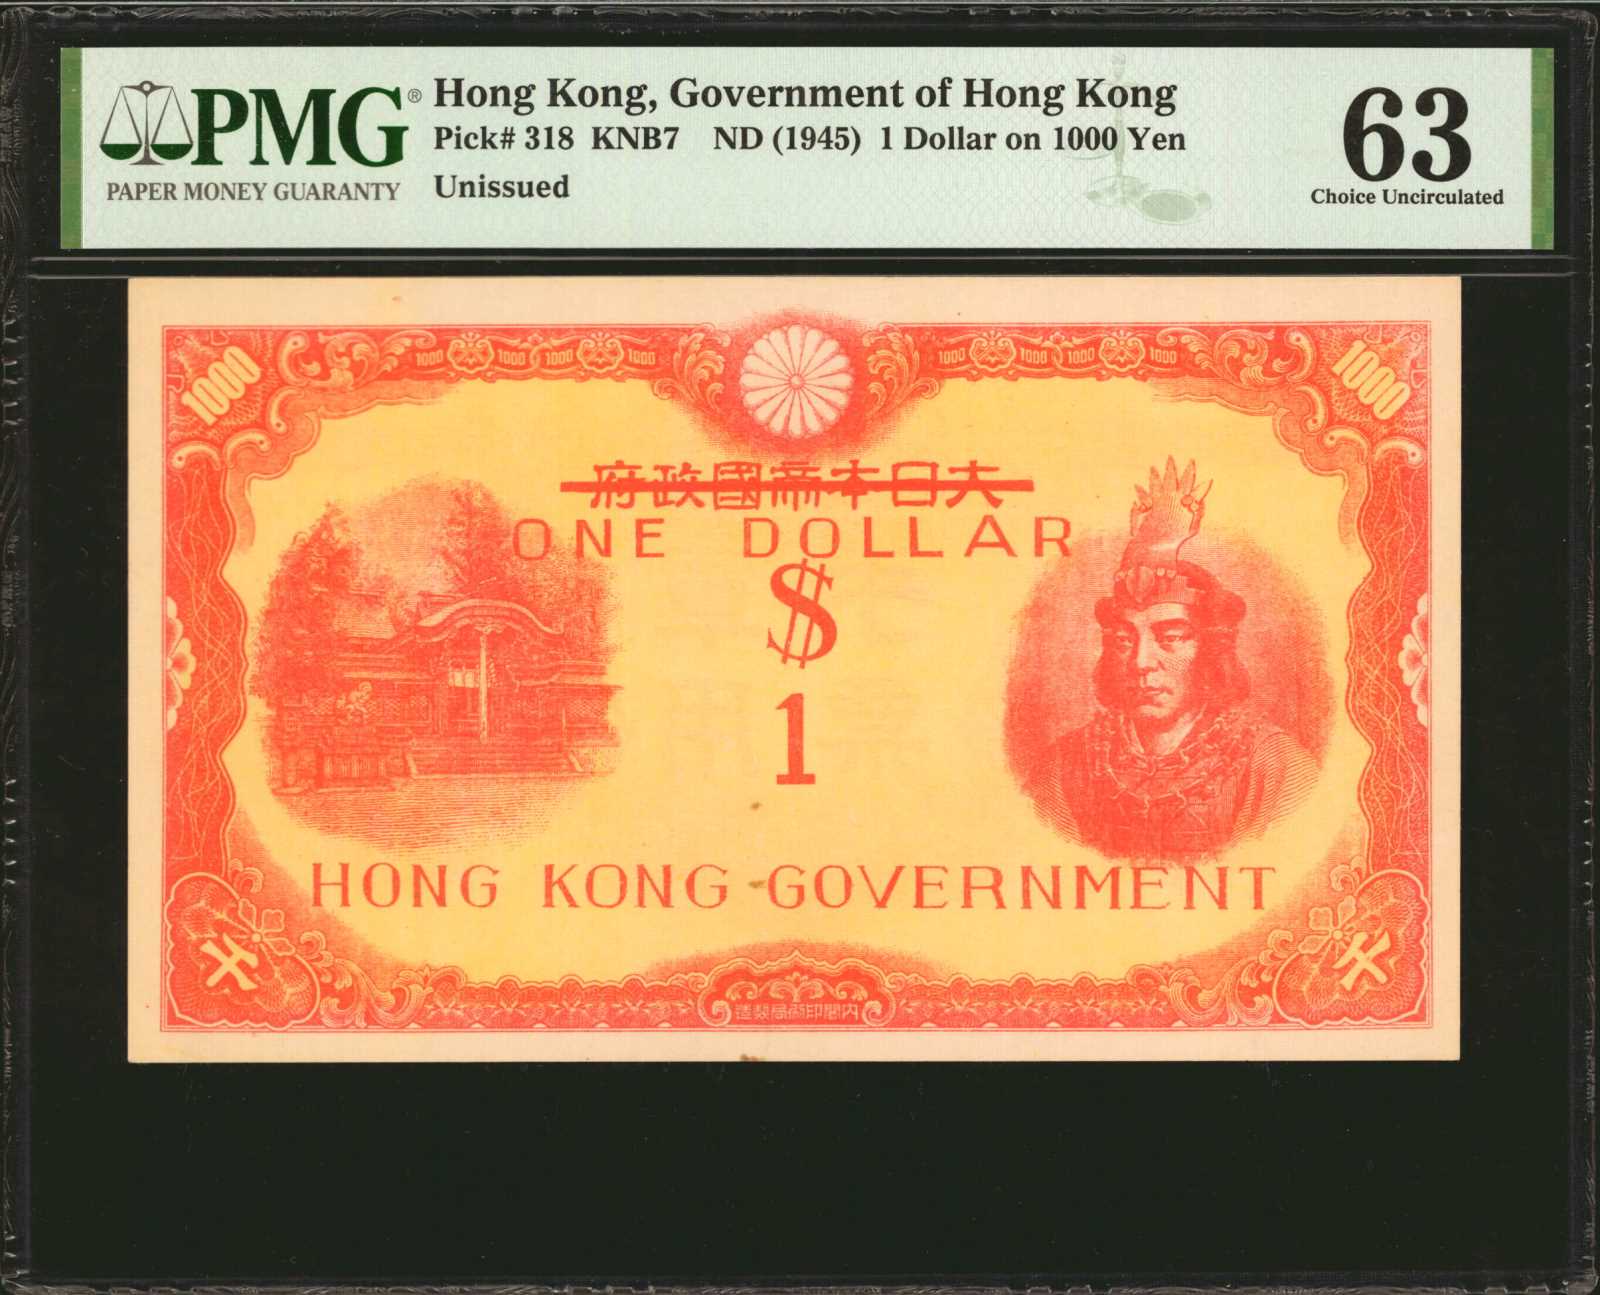 HONG KONG. Government of Hong Kong. 1 Dollar on 1000 Yen, ND (1945). P-318.  Unissued. PMG Choice Uncirculated 63.